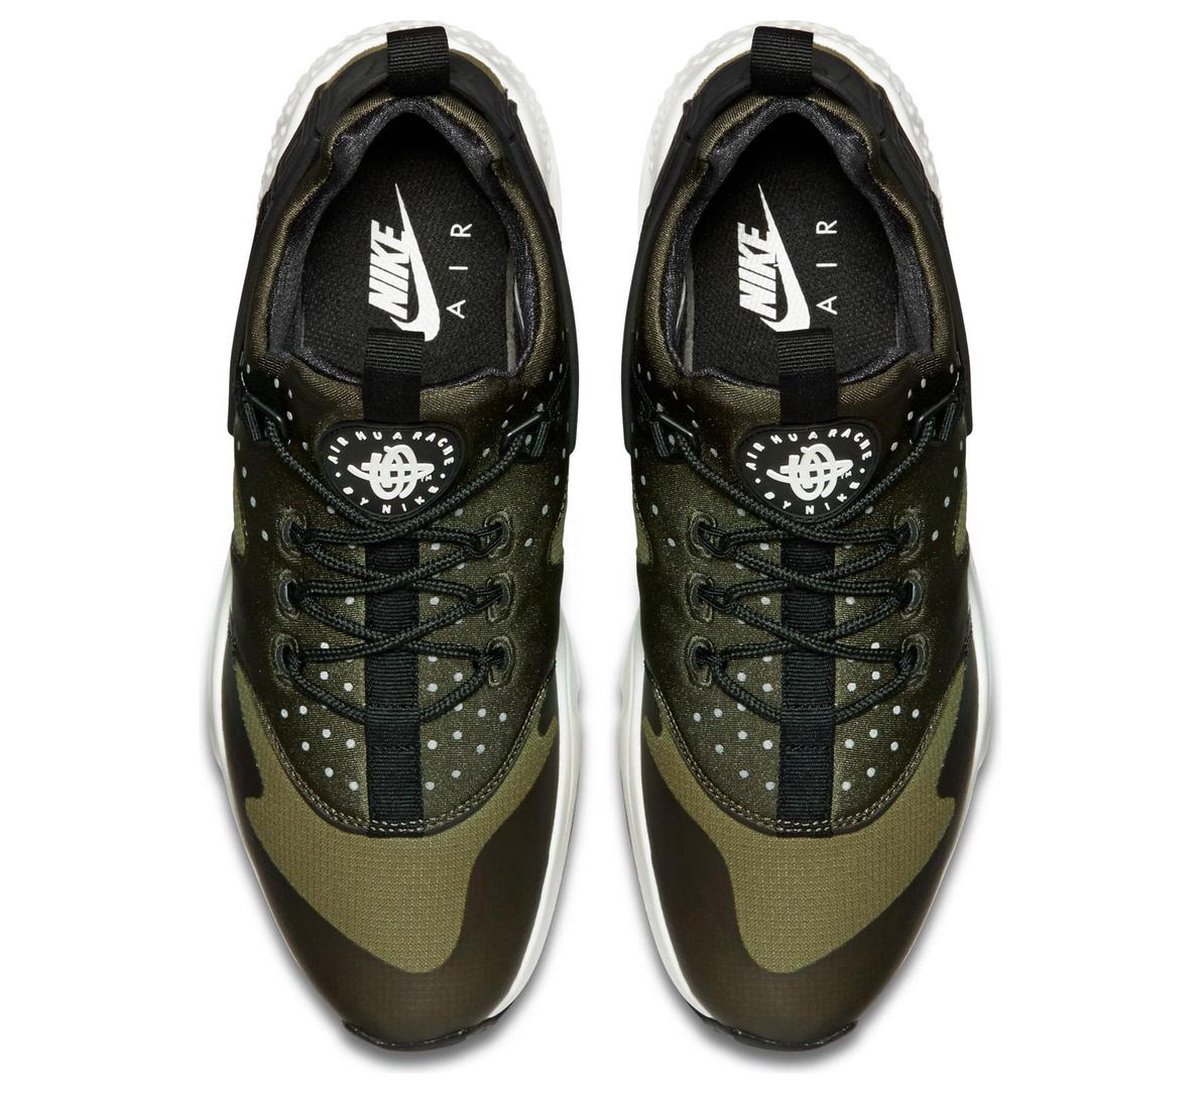 Dubbelzinnigheid Dollar vriendelijke groet Nike Air Huarache Utlity Sportschoenen - Maat 41 - Mannen - groen/zwart/wit  | bol.com